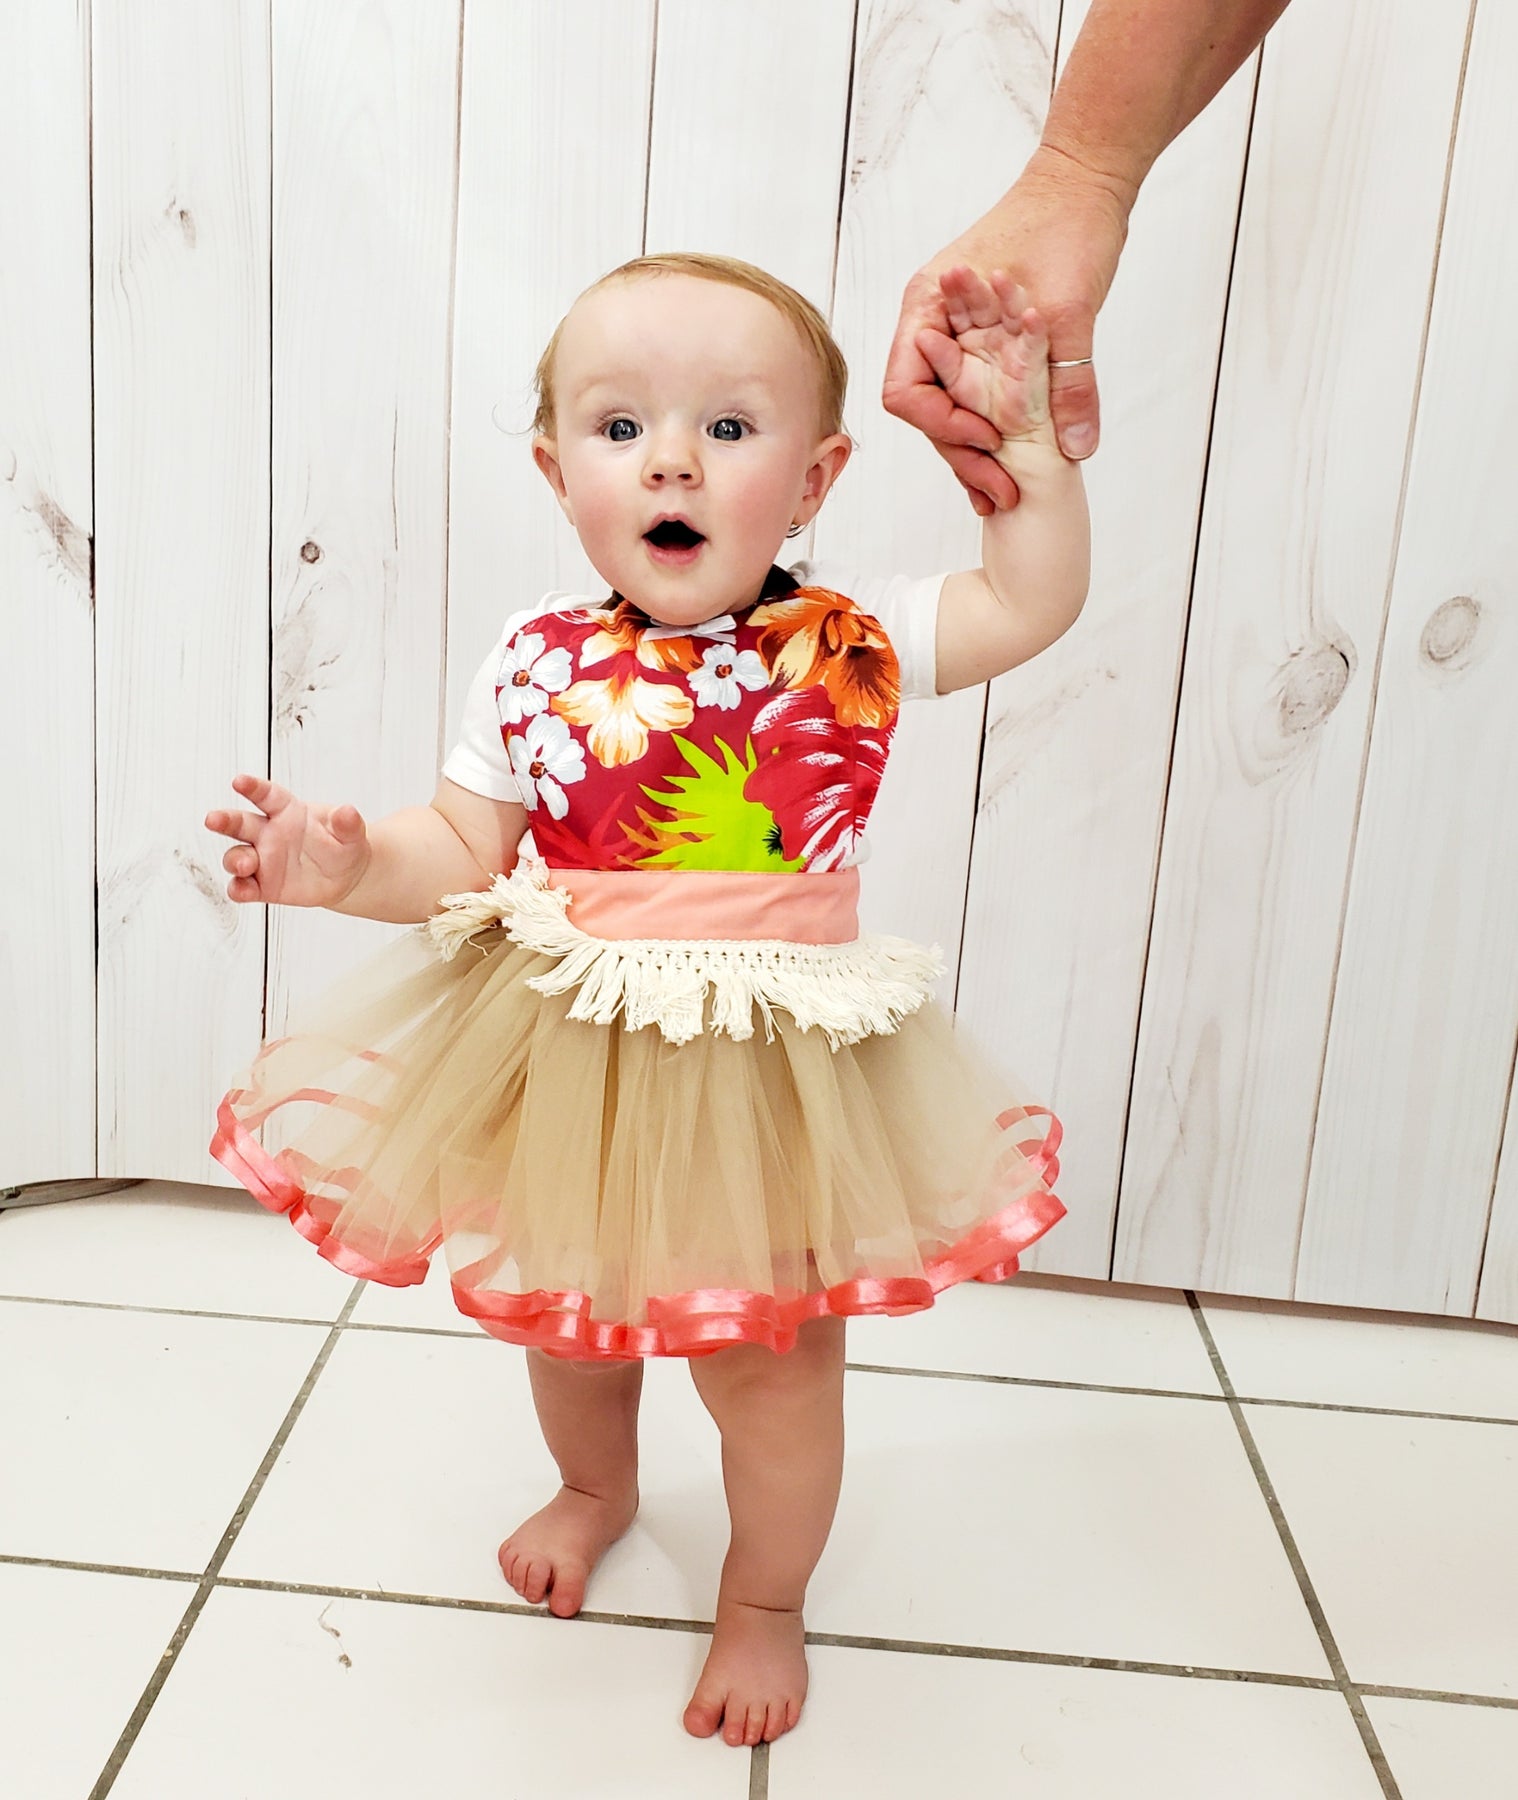 Alice in Wonderland Baby Costume, Baby Alice in Wonderland Dress Up,  Newborn Photo Prop, Baby Shower Gift, Baby Girl Cake Smash Outfit 